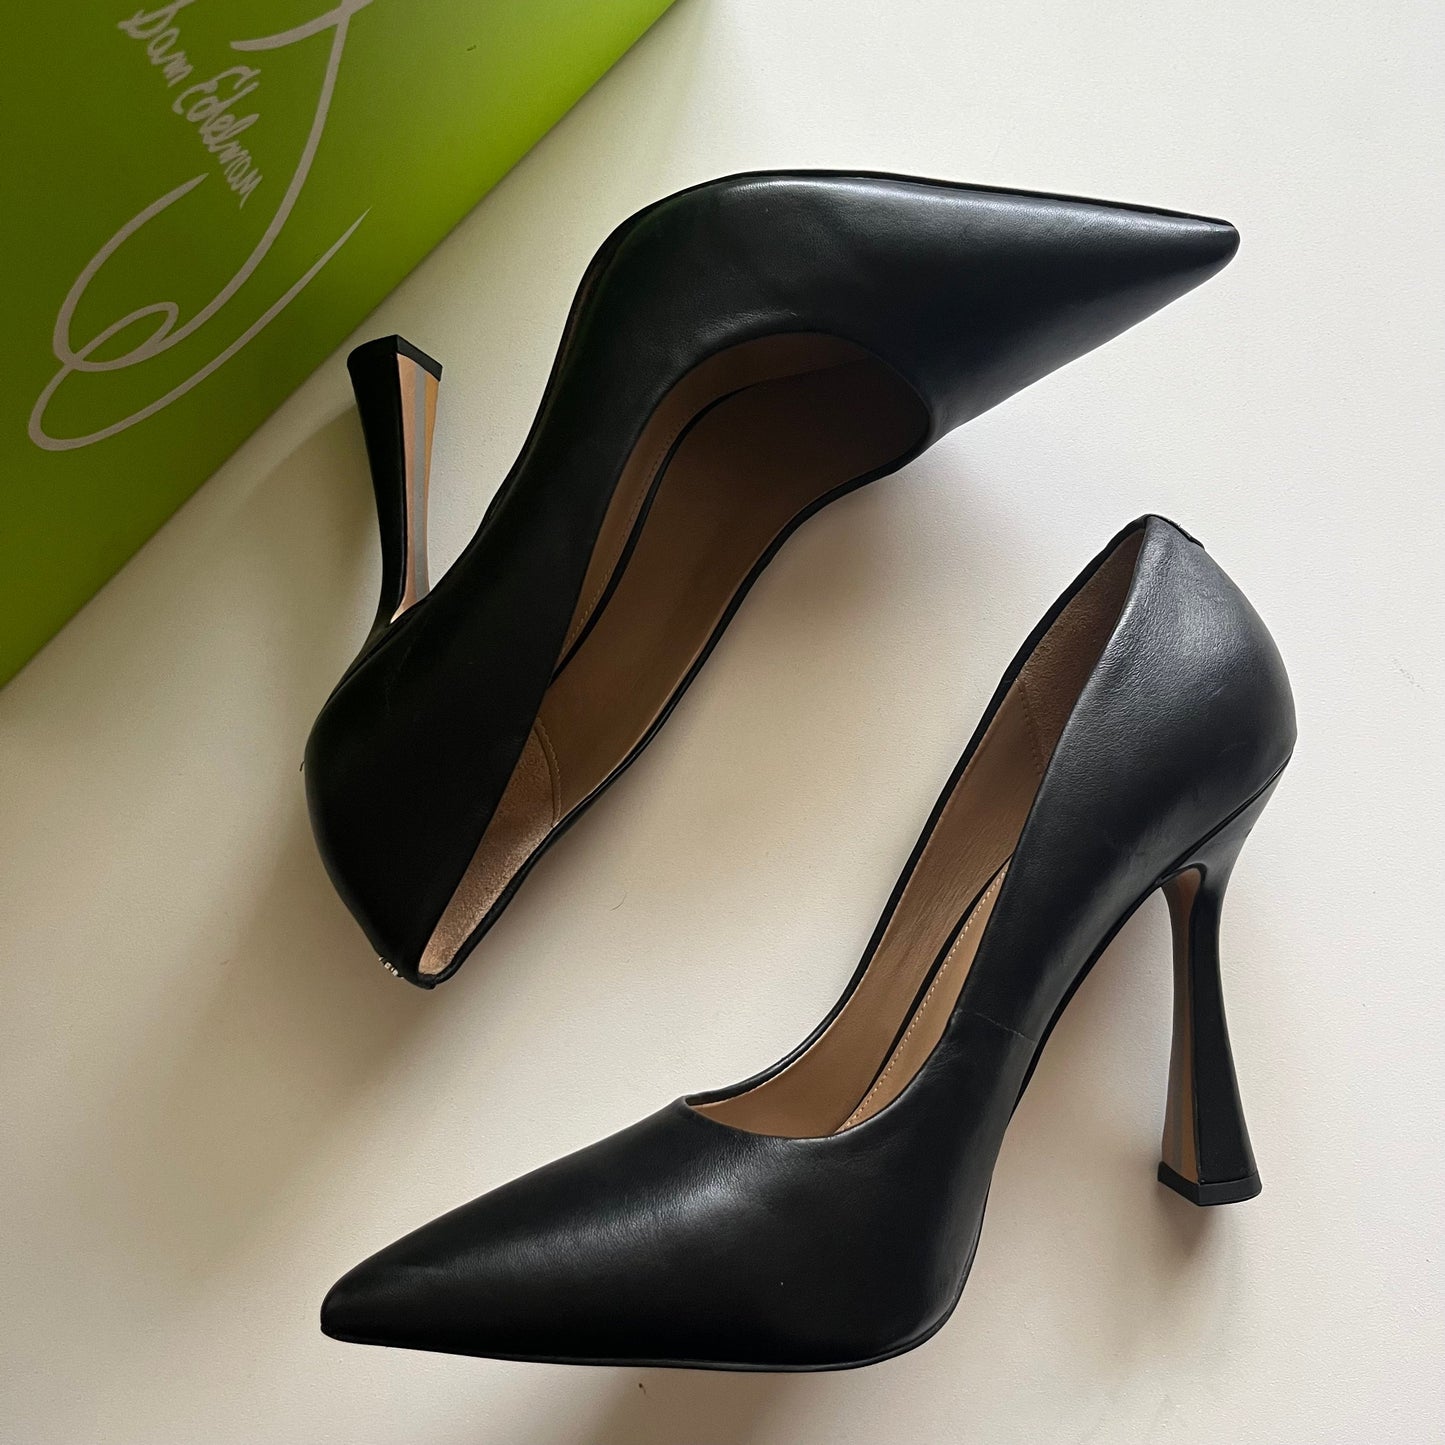 Black Shoes Heels Stiletto Sam Edelman, Size 9.5